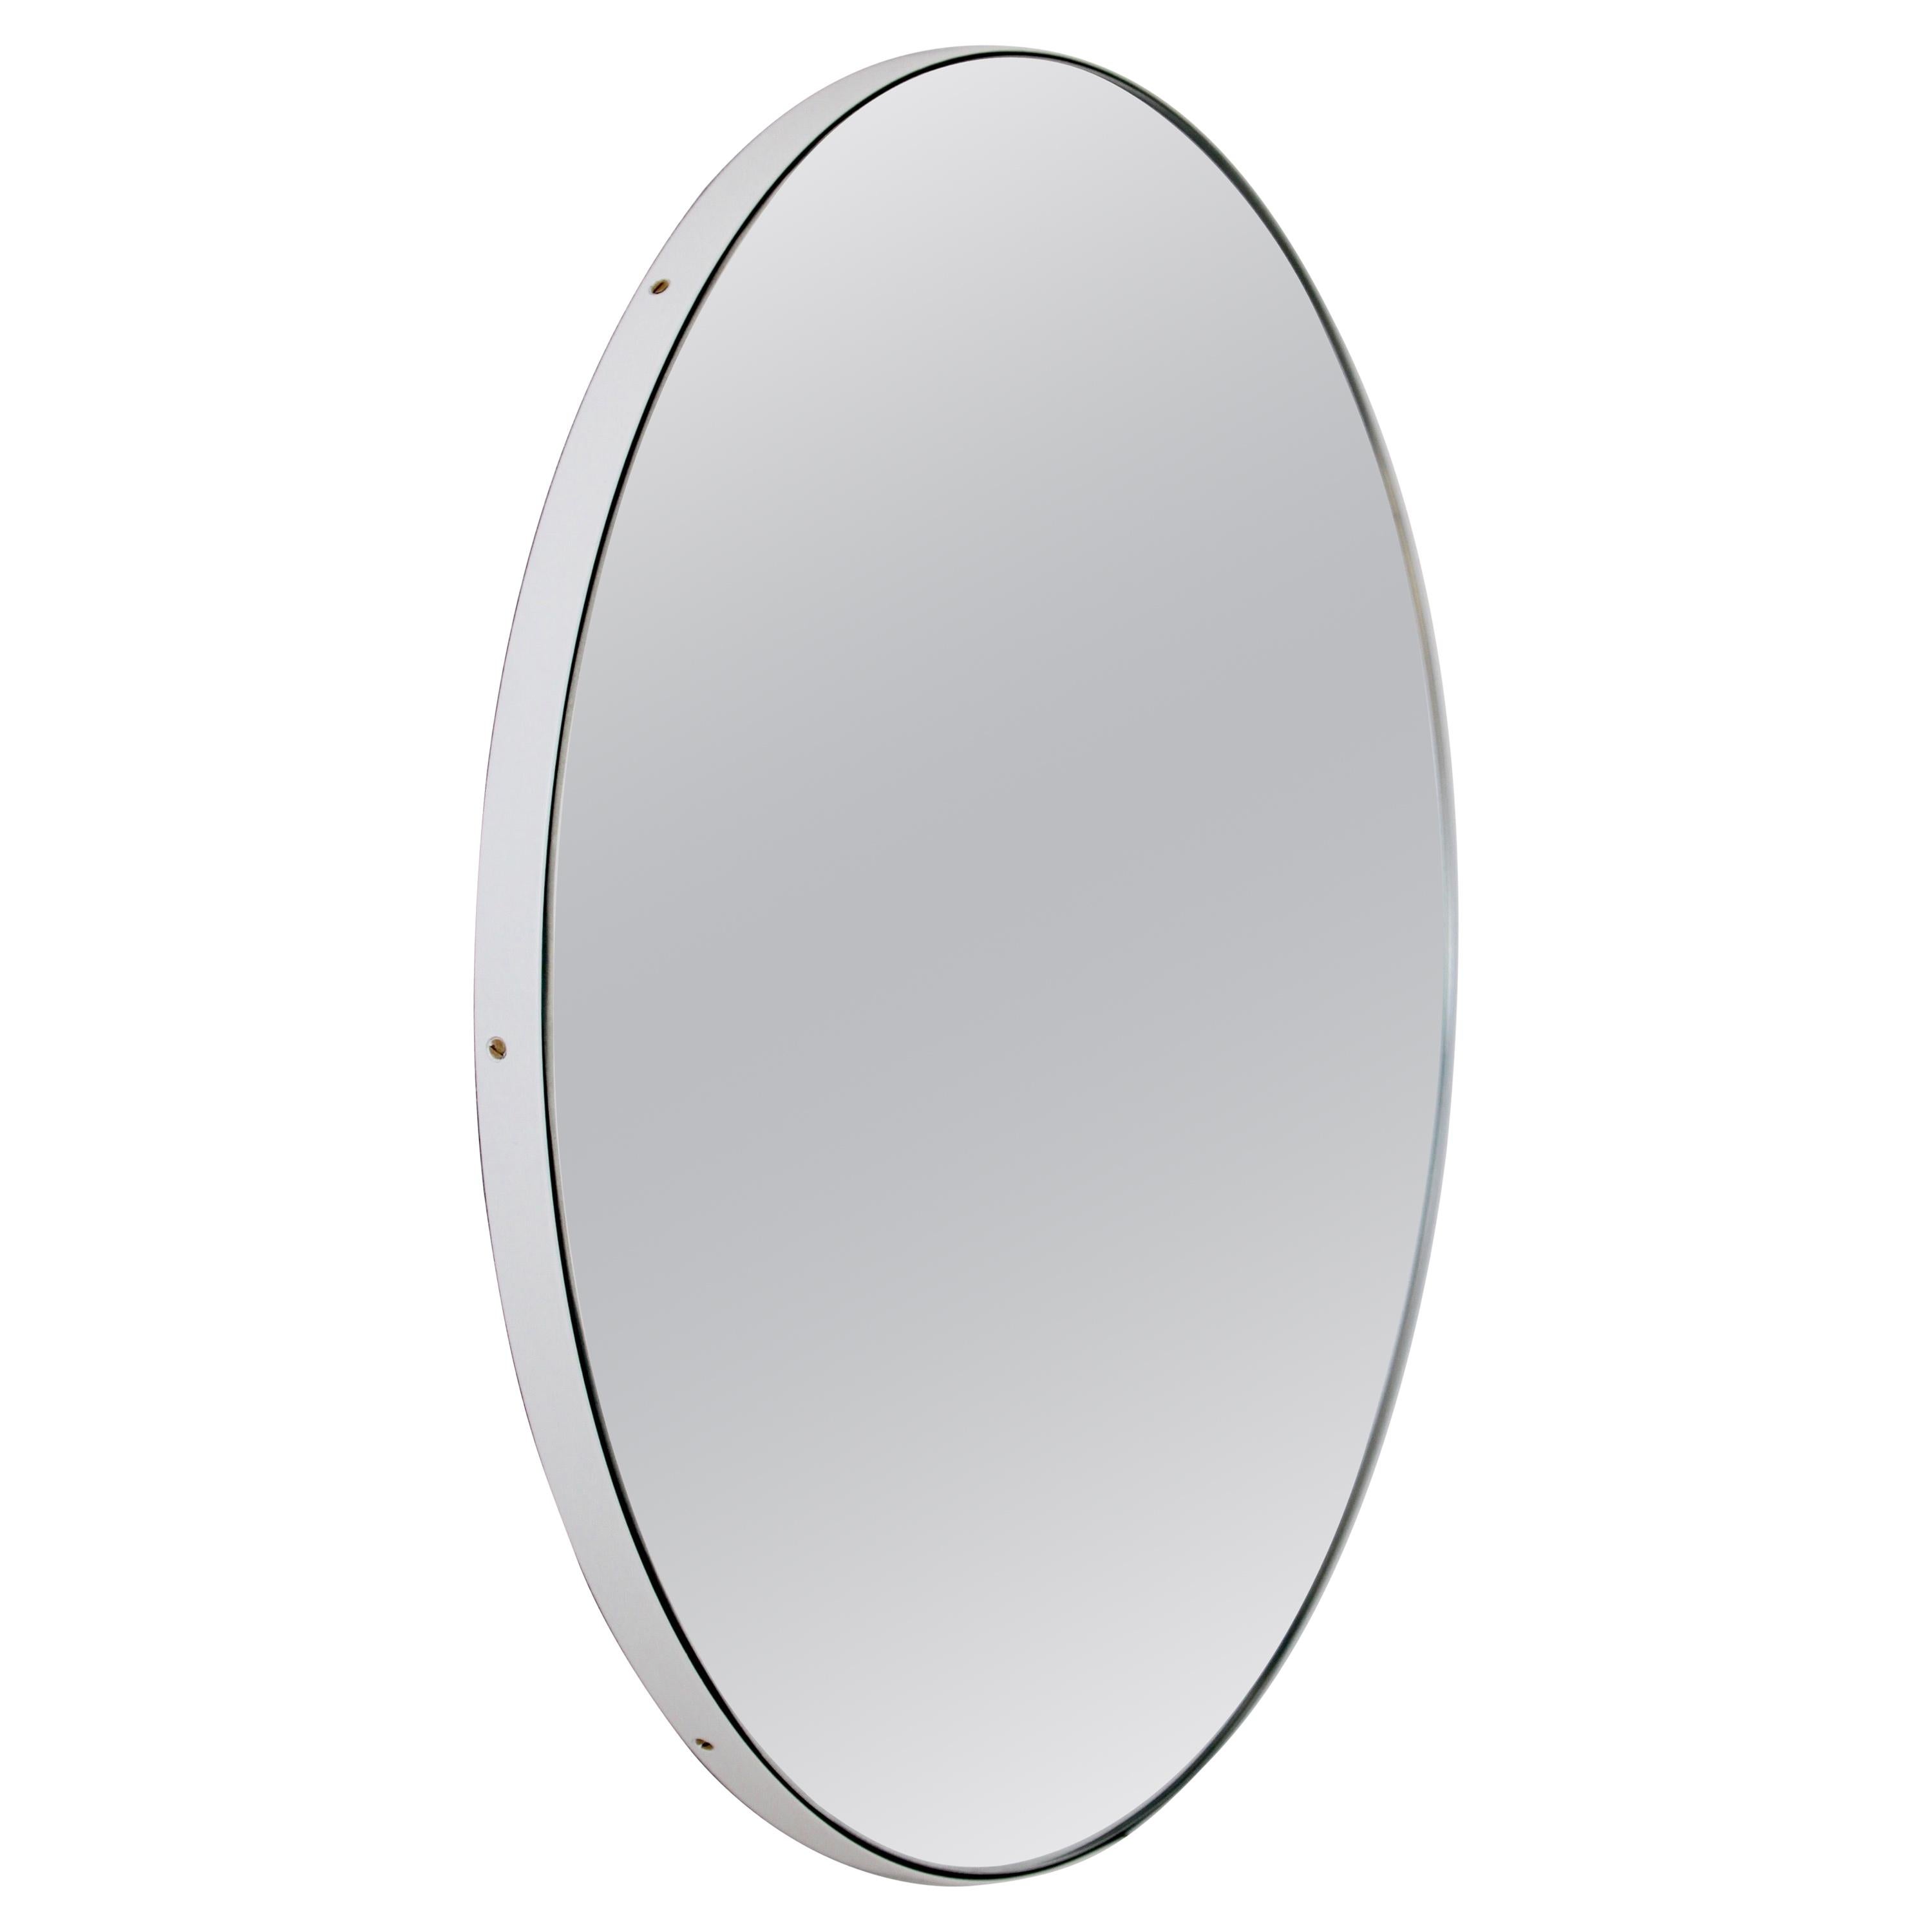 In Stock Orbis Round Minimalist Mirror with White Frame, Large